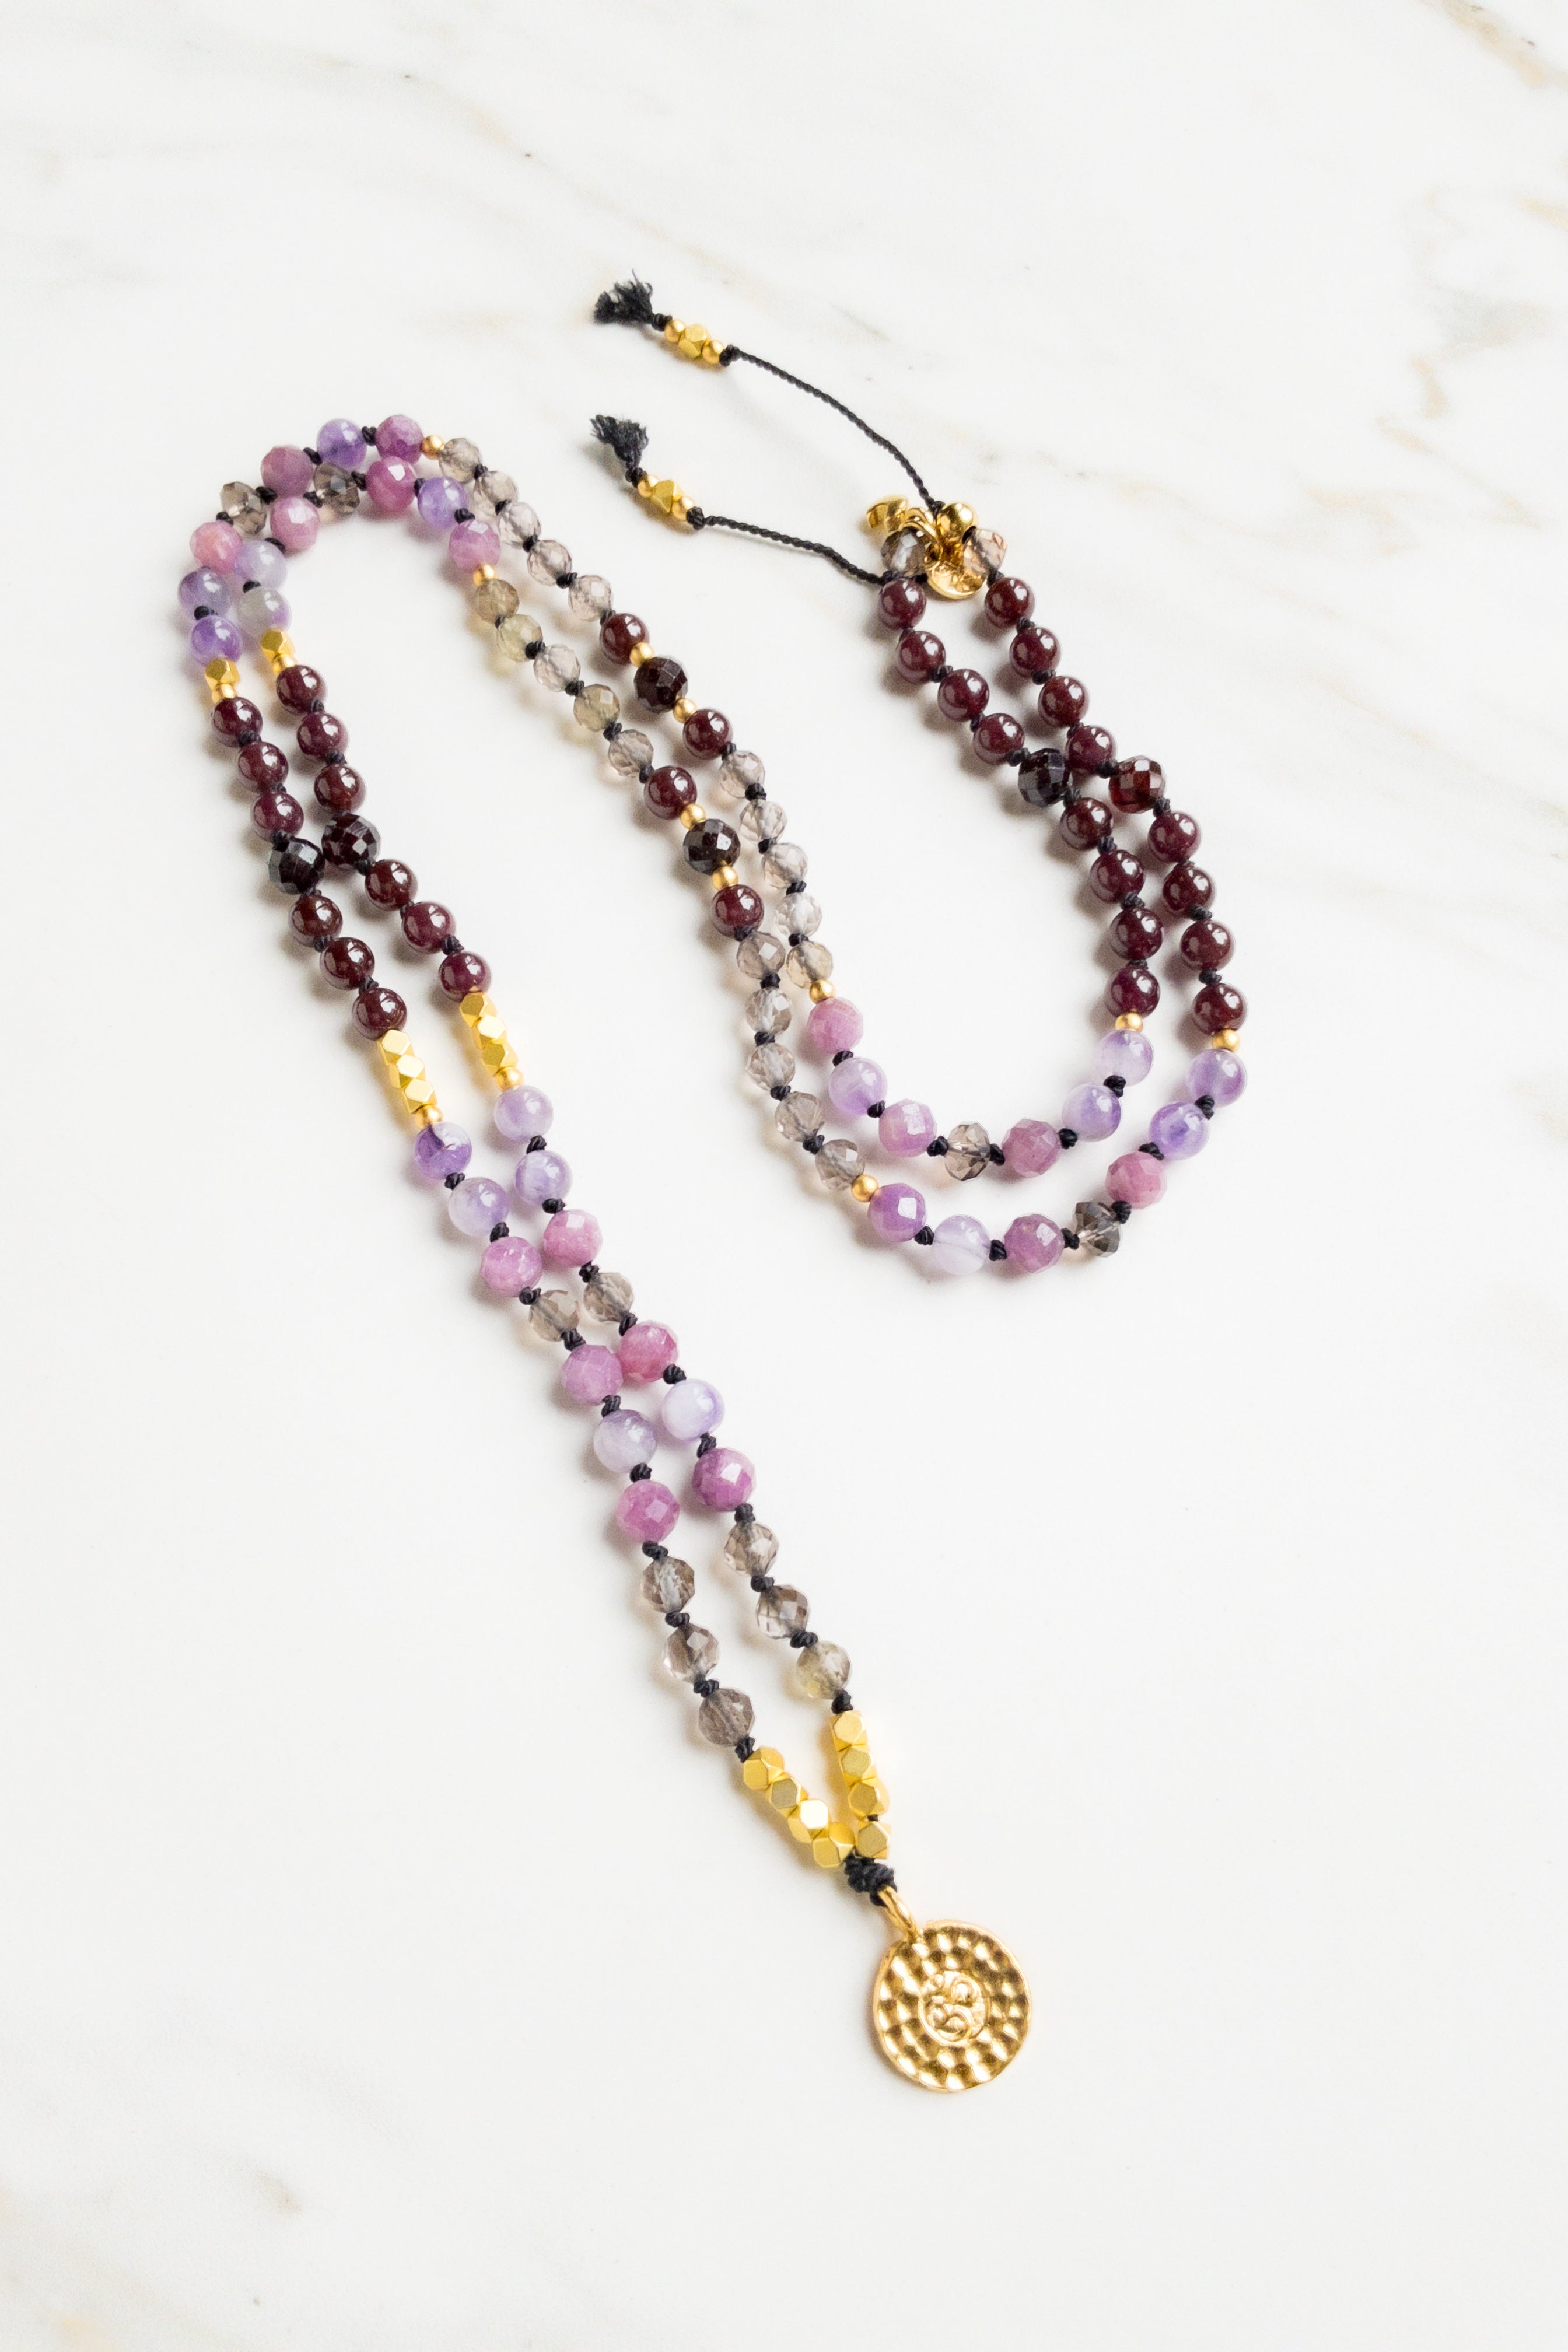 Ethereal Harmony MALA Necklace  - shashā jewellery méditation tools Switzerland 